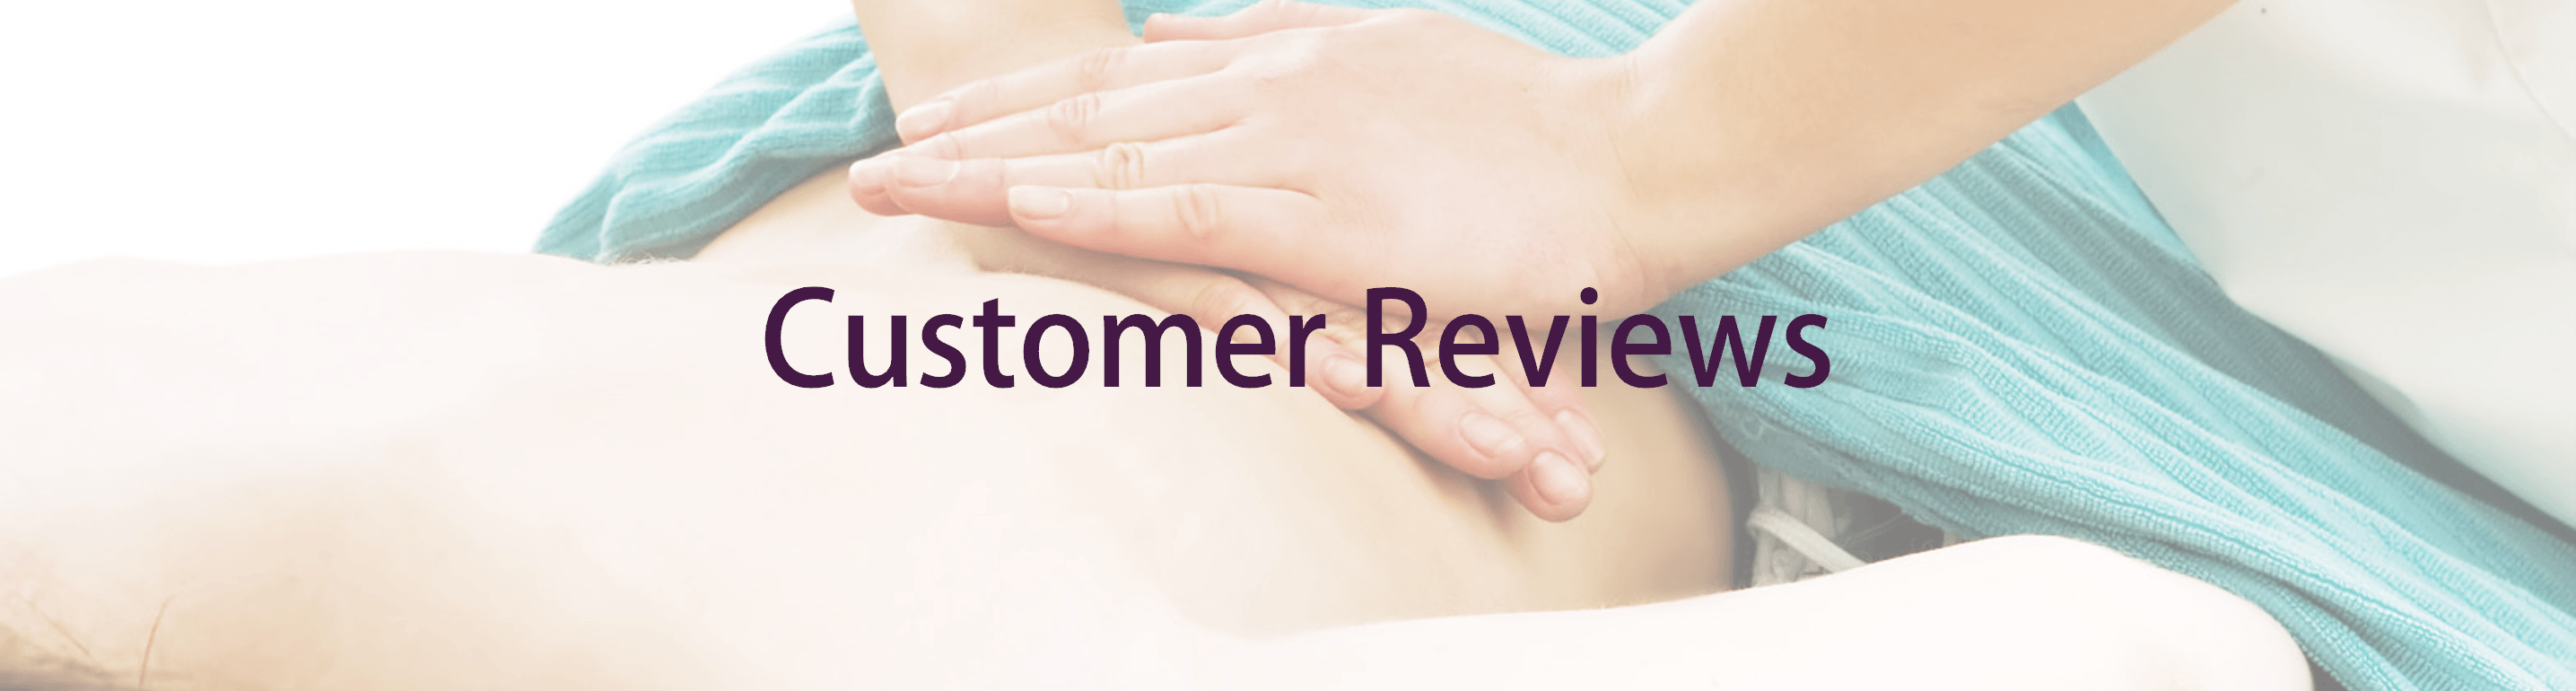 Horizon Clinic Customer Reviews